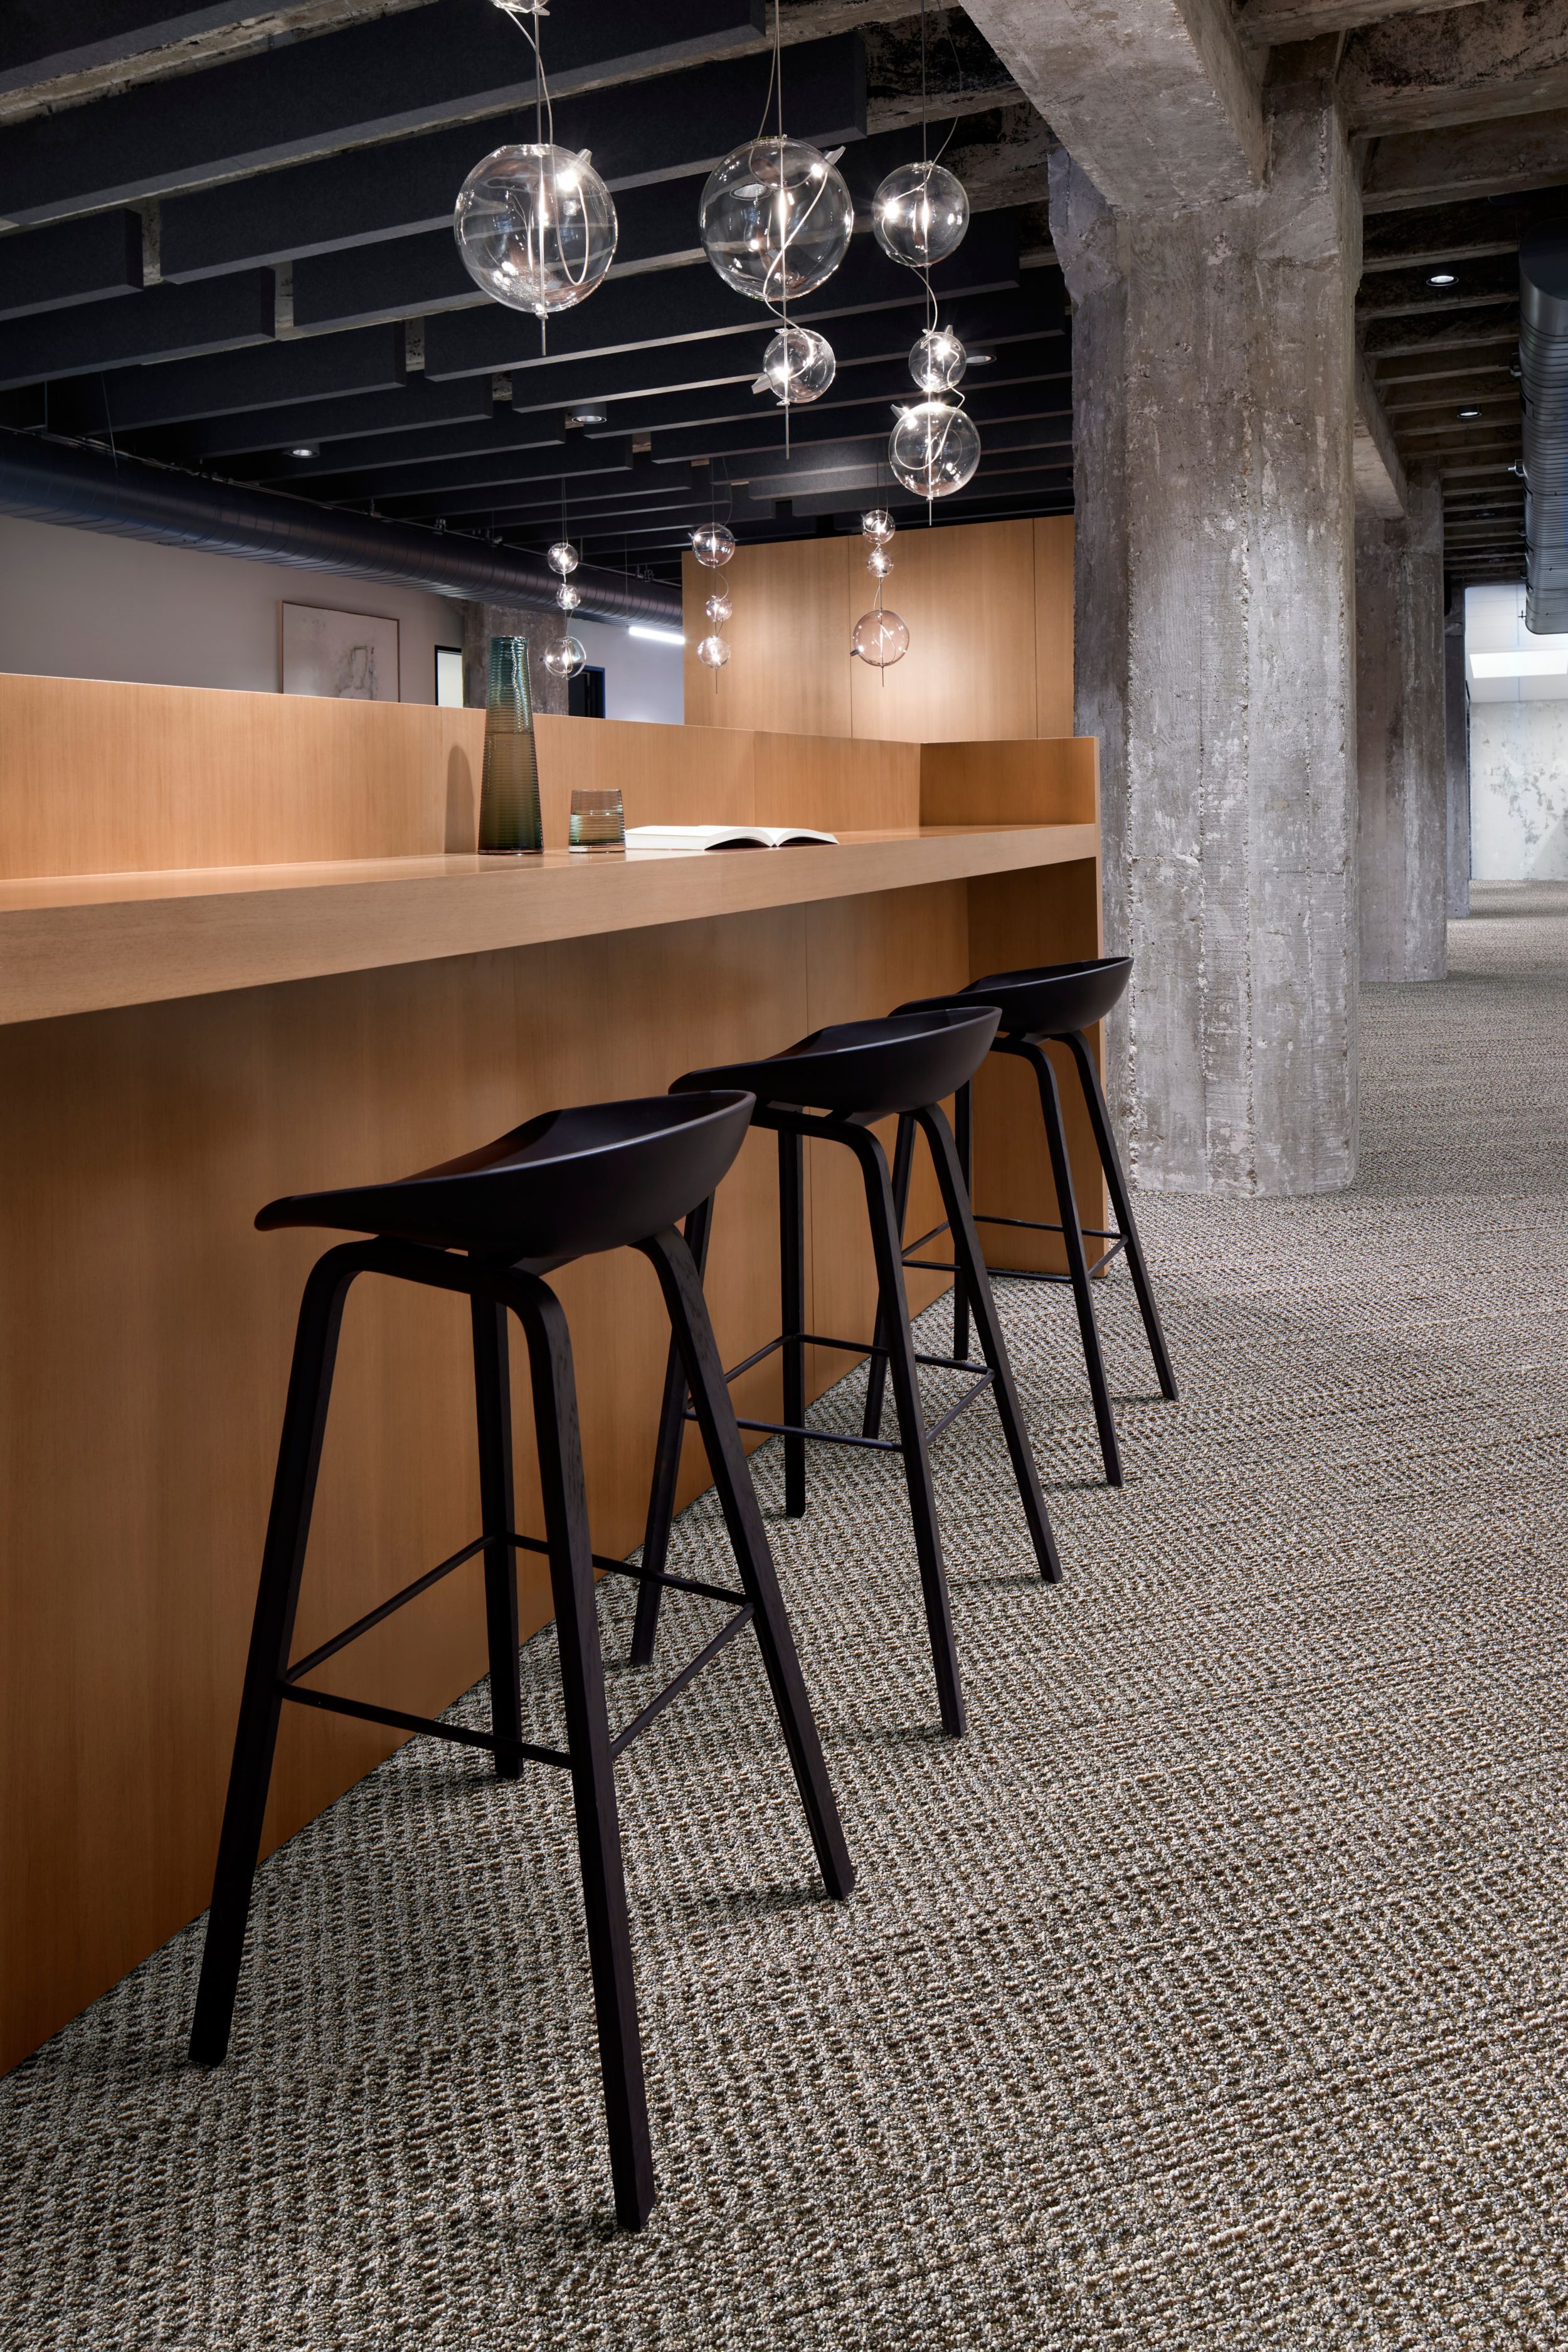 Interface E615 plank carpet tile in workspace cafe imagen número 1